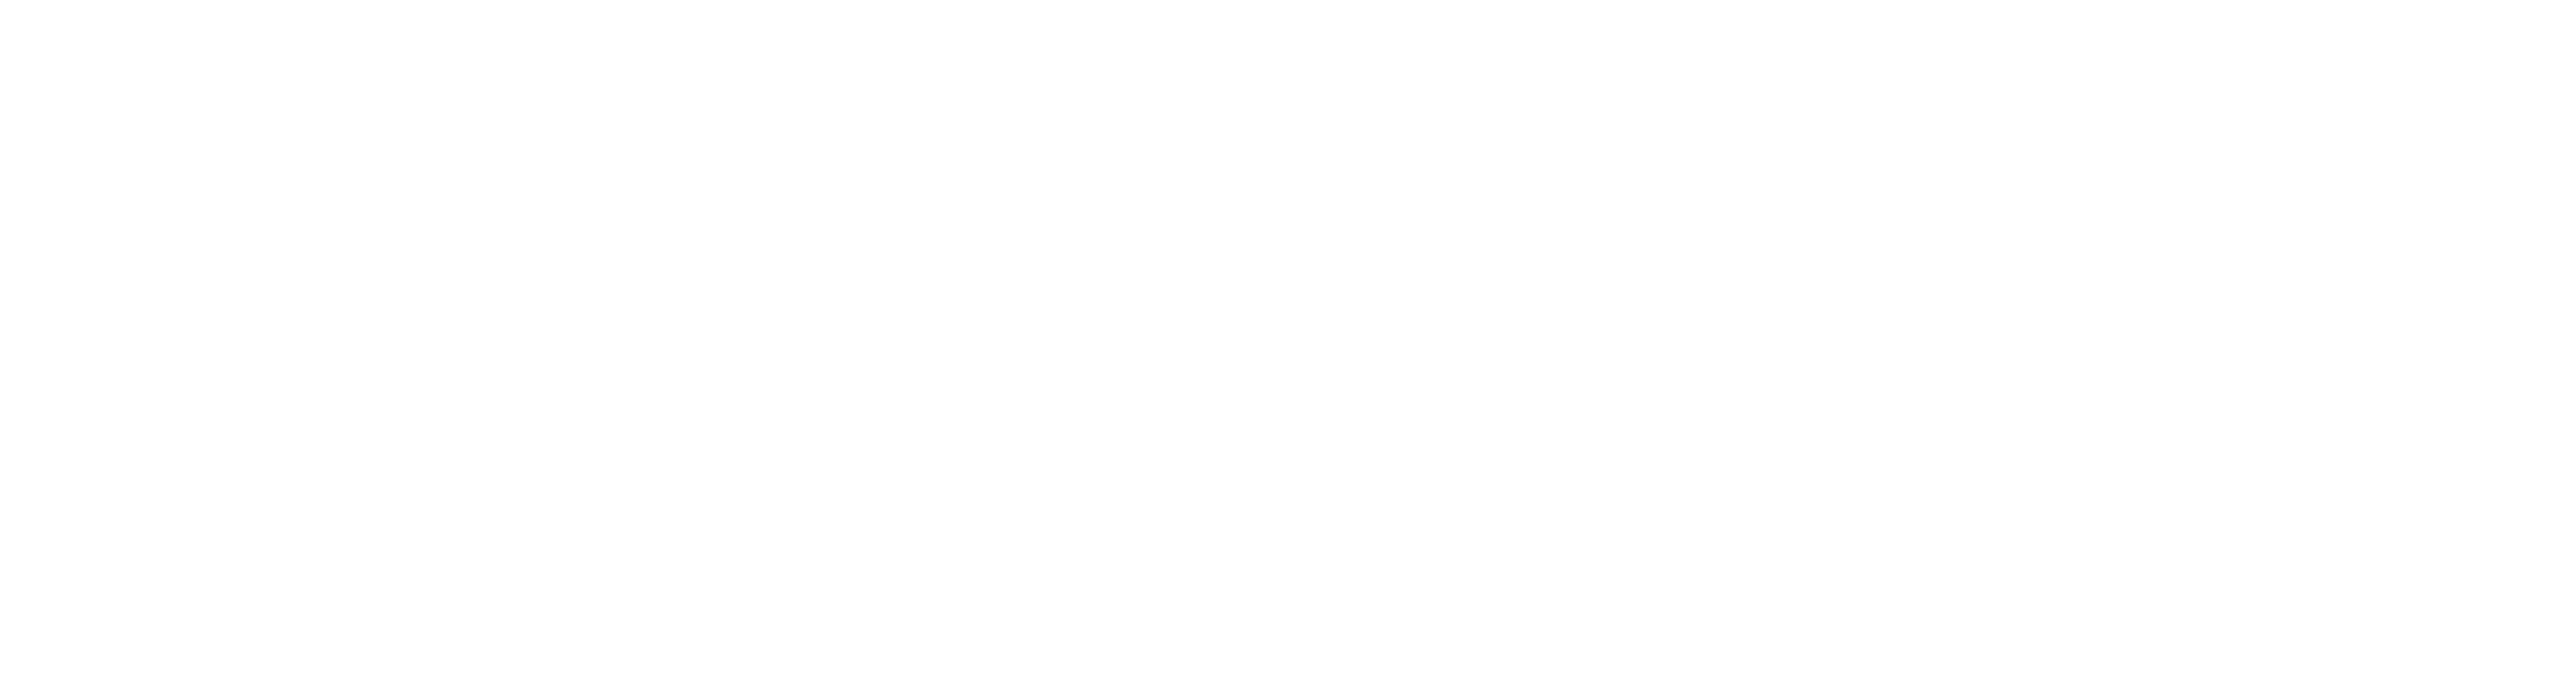 logo europa next gen